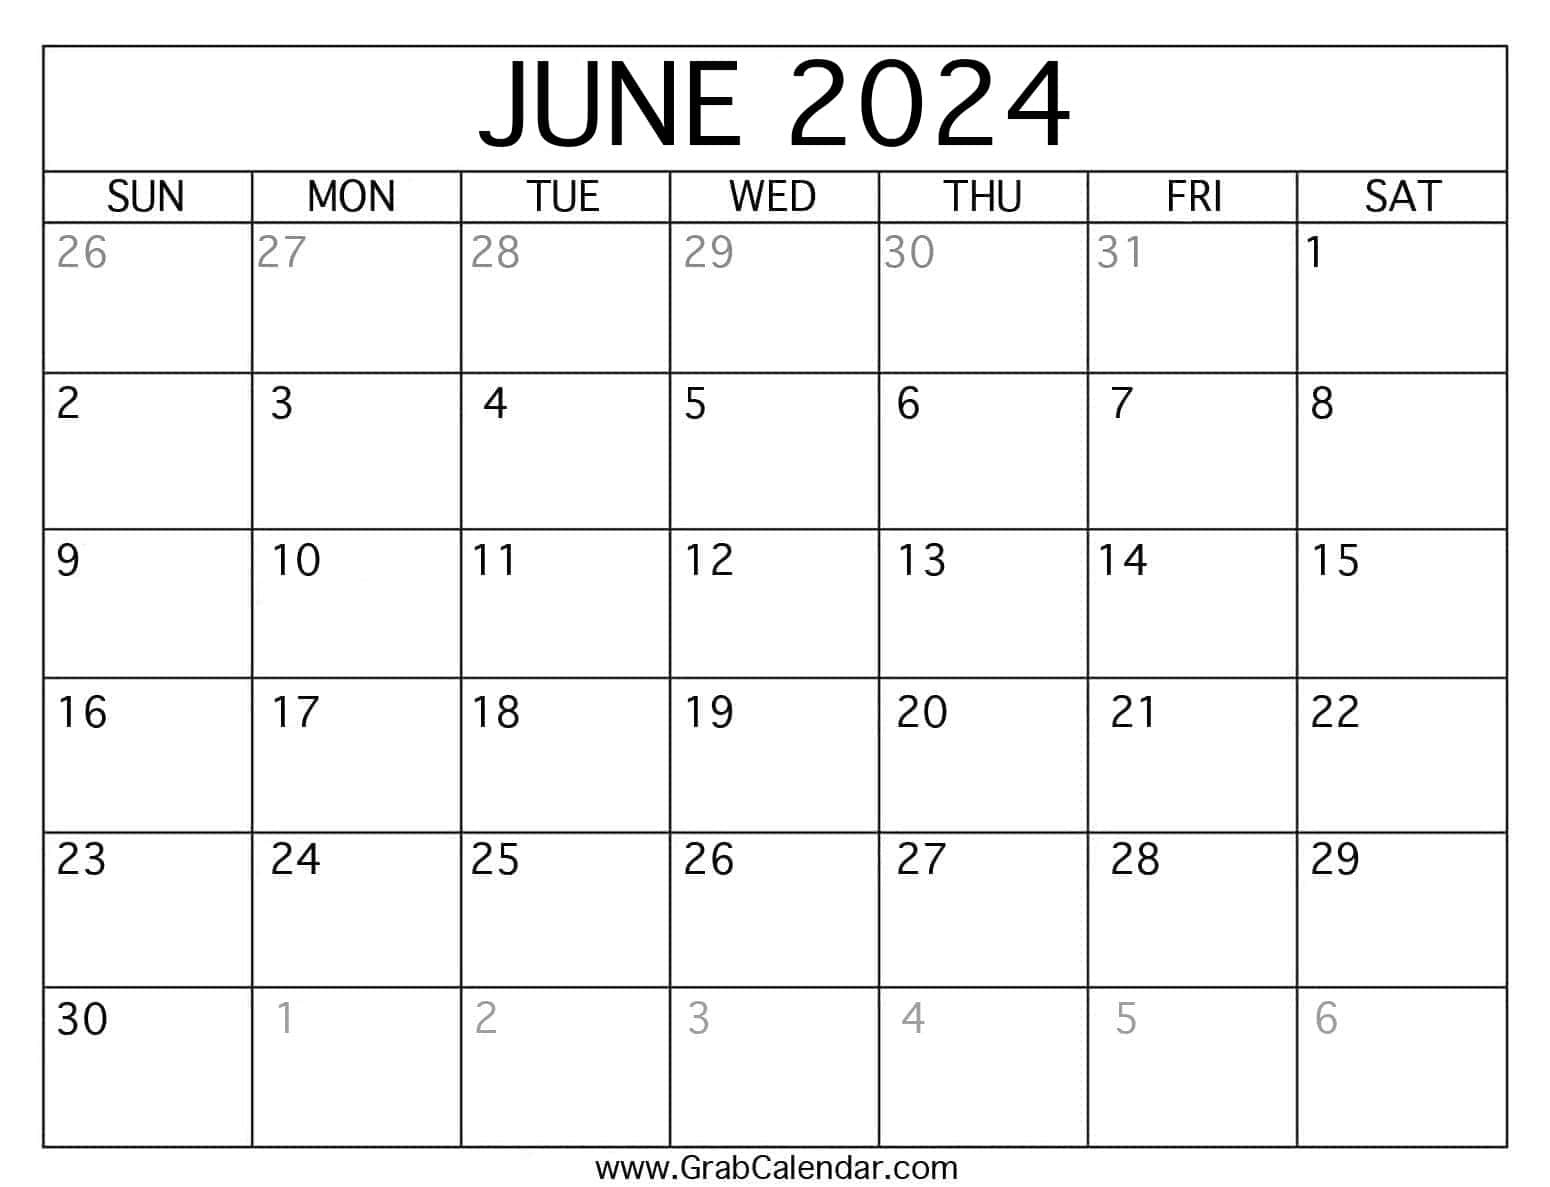 Printable June 2024 Calendar regarding Show Me A Calendar For The Month Of June 2024